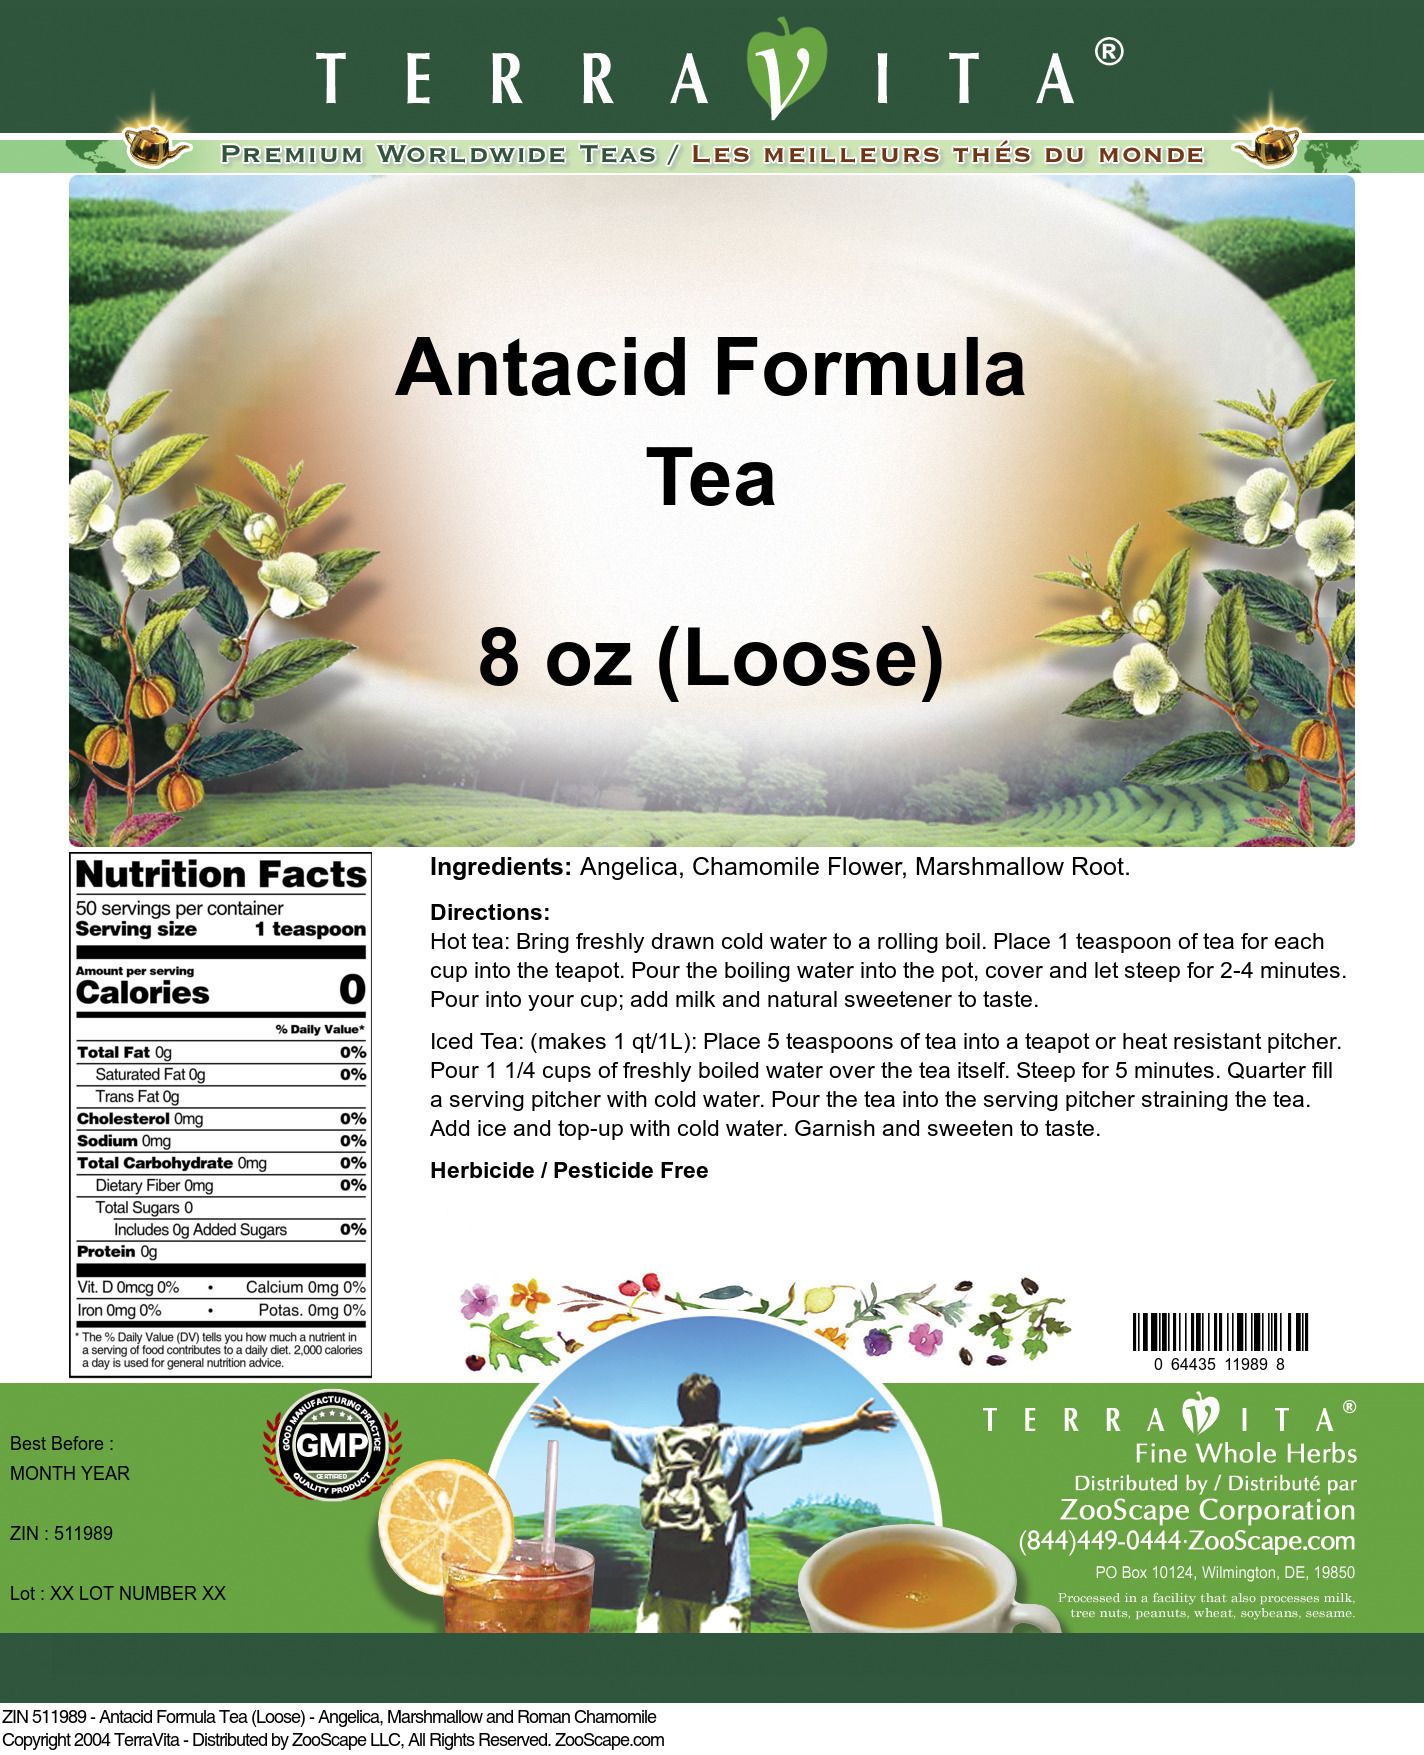 Antacid Formula Tea (Loose) - Angelica, Marshmallow and Roman Chamomile - Label